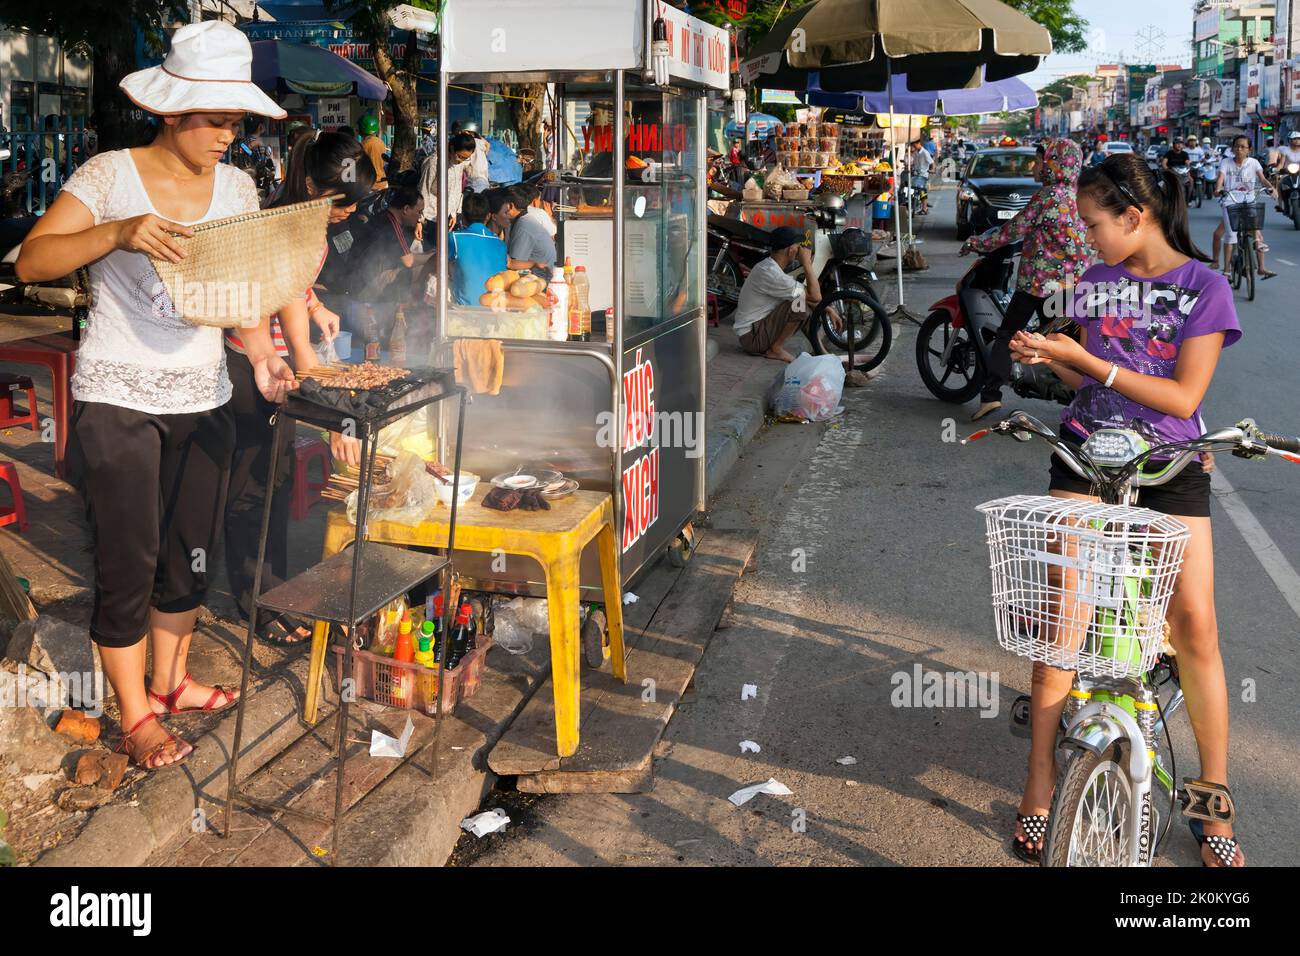 Vietnamese vendor cooking on barbeque in open air street market, Hai Phong, Vietnam Stock Photo